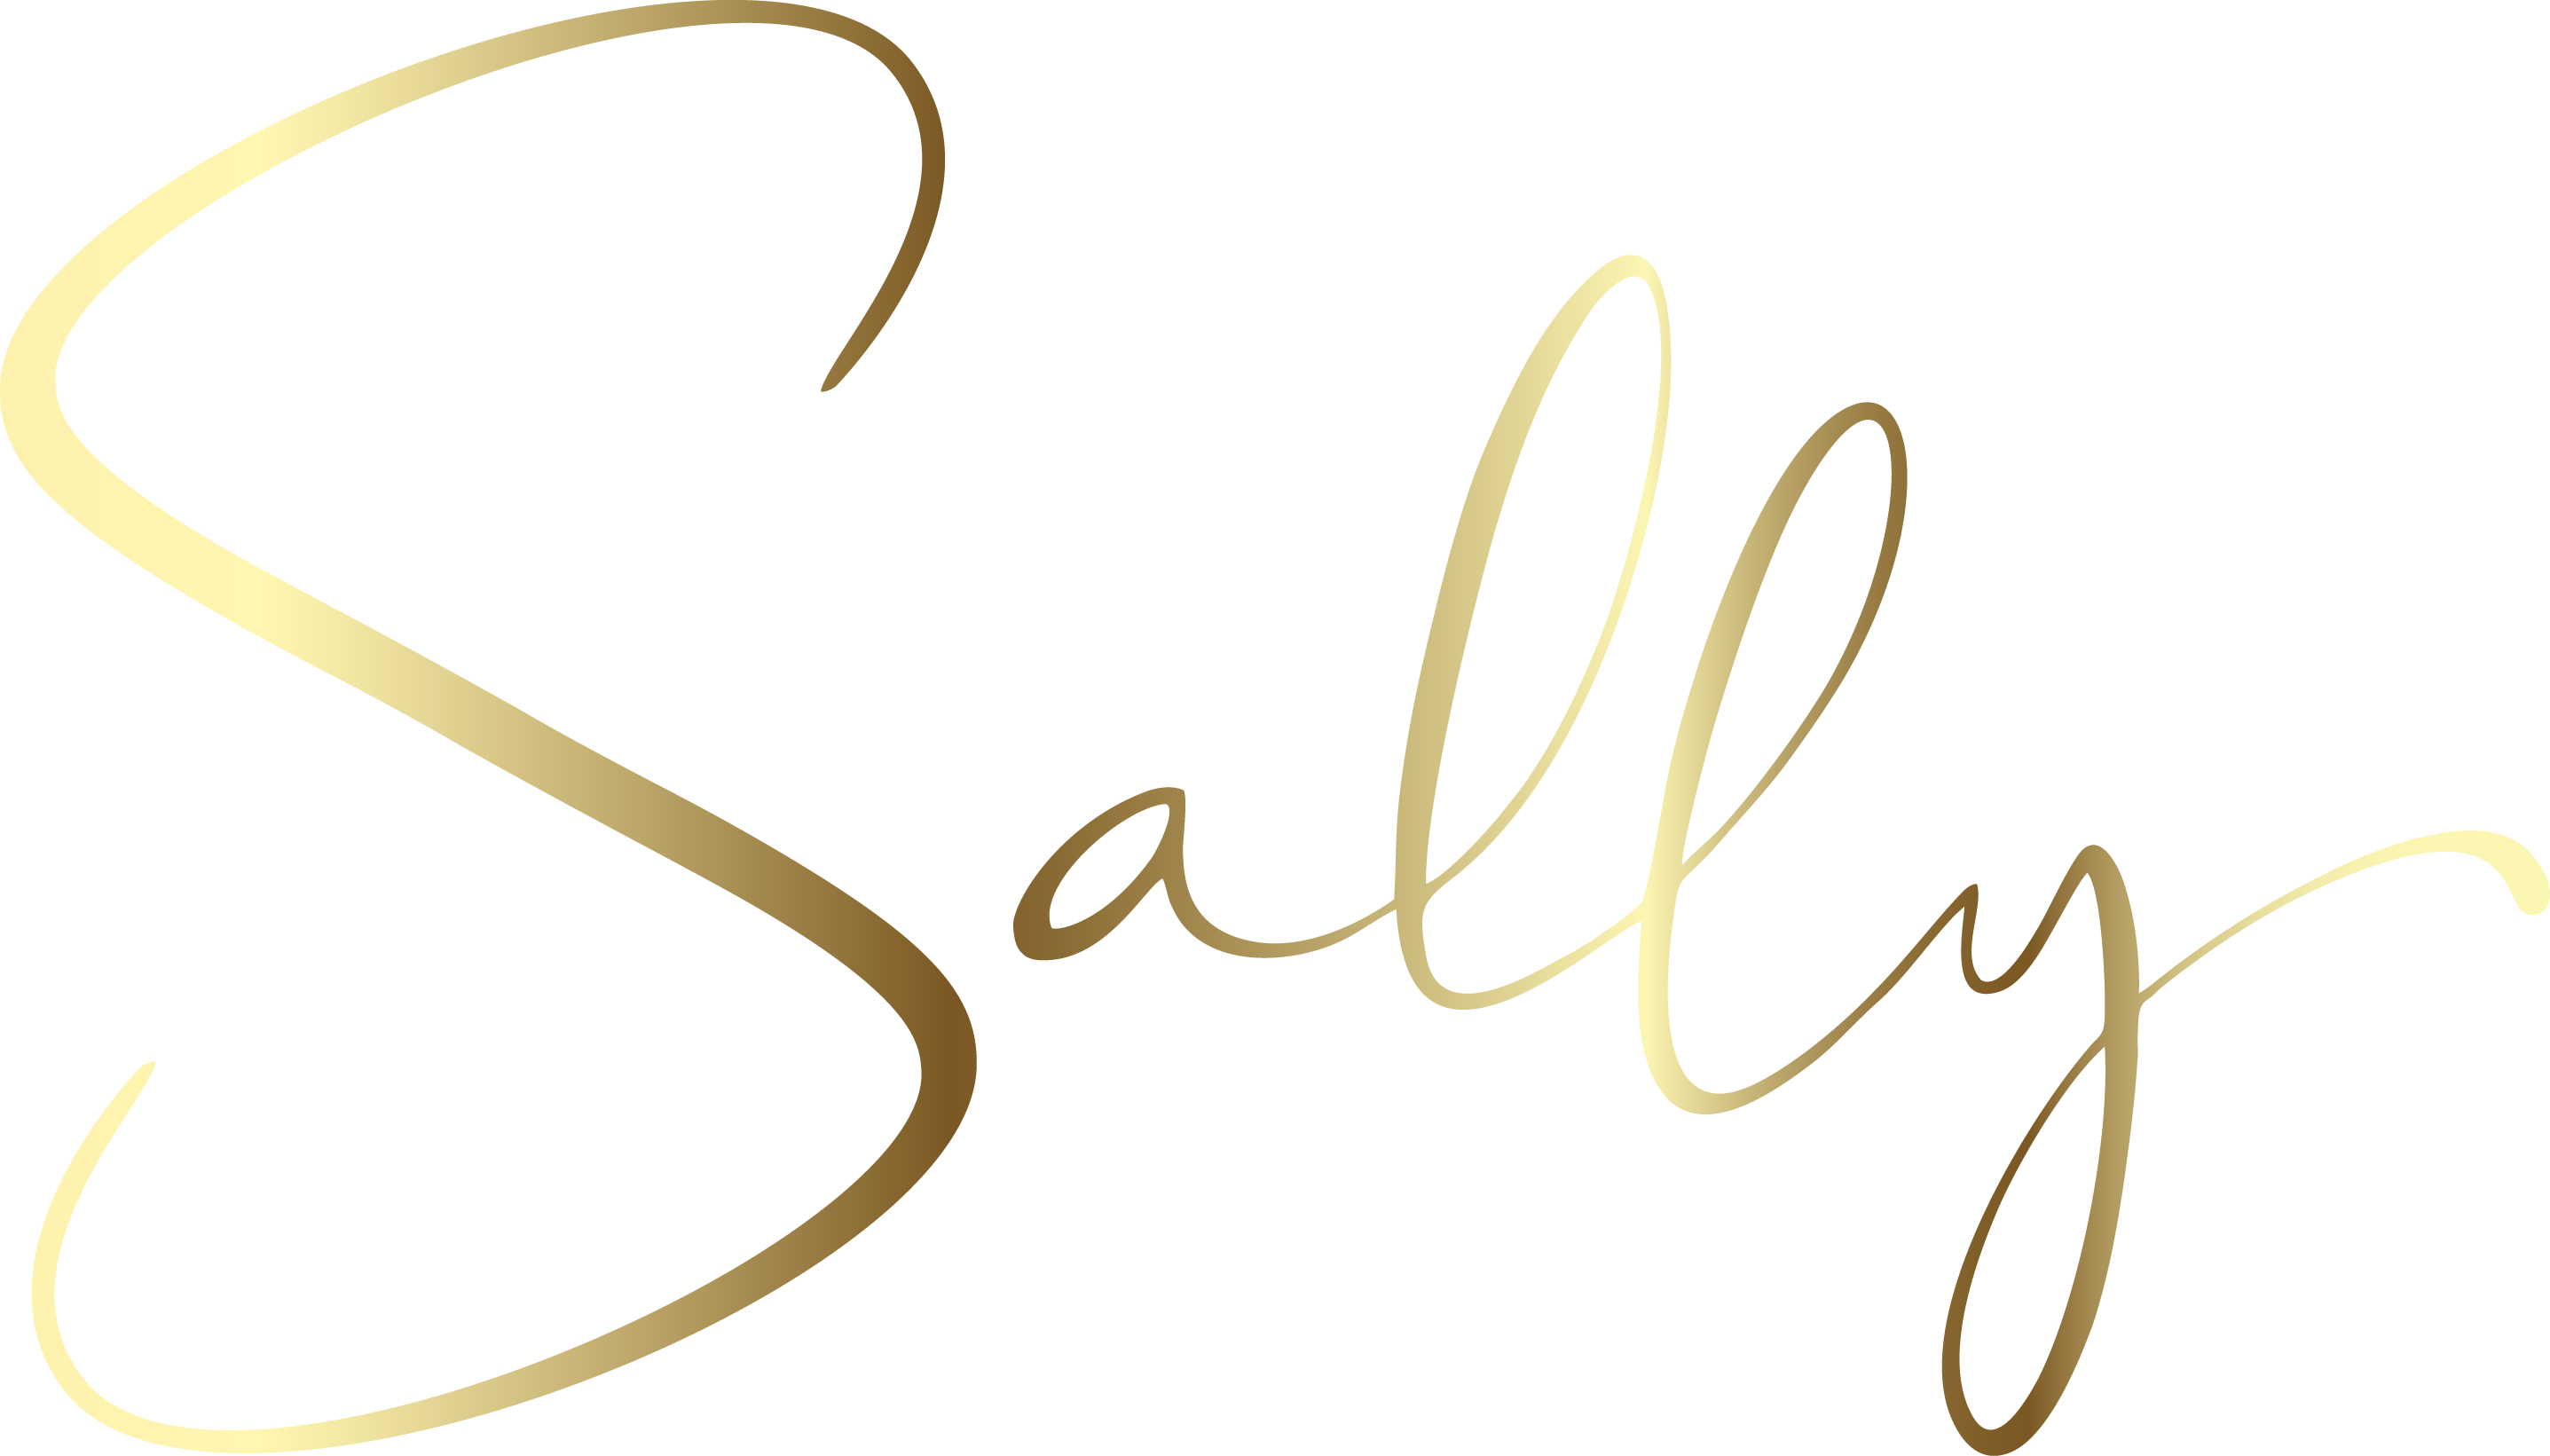 Sally Saba